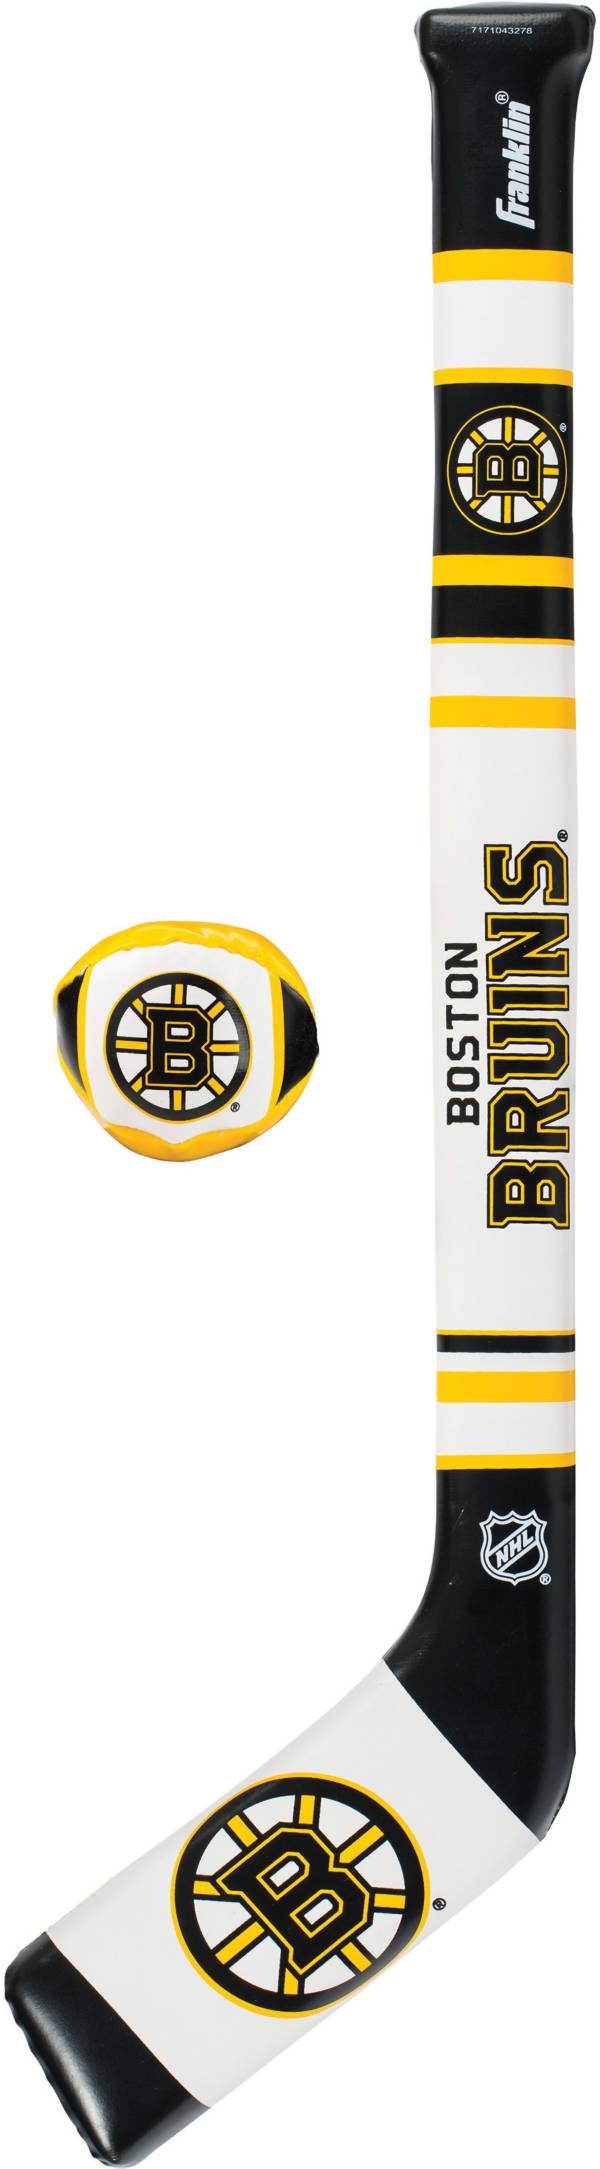 Franklin Boston Bruins Mini Hockey Set product image